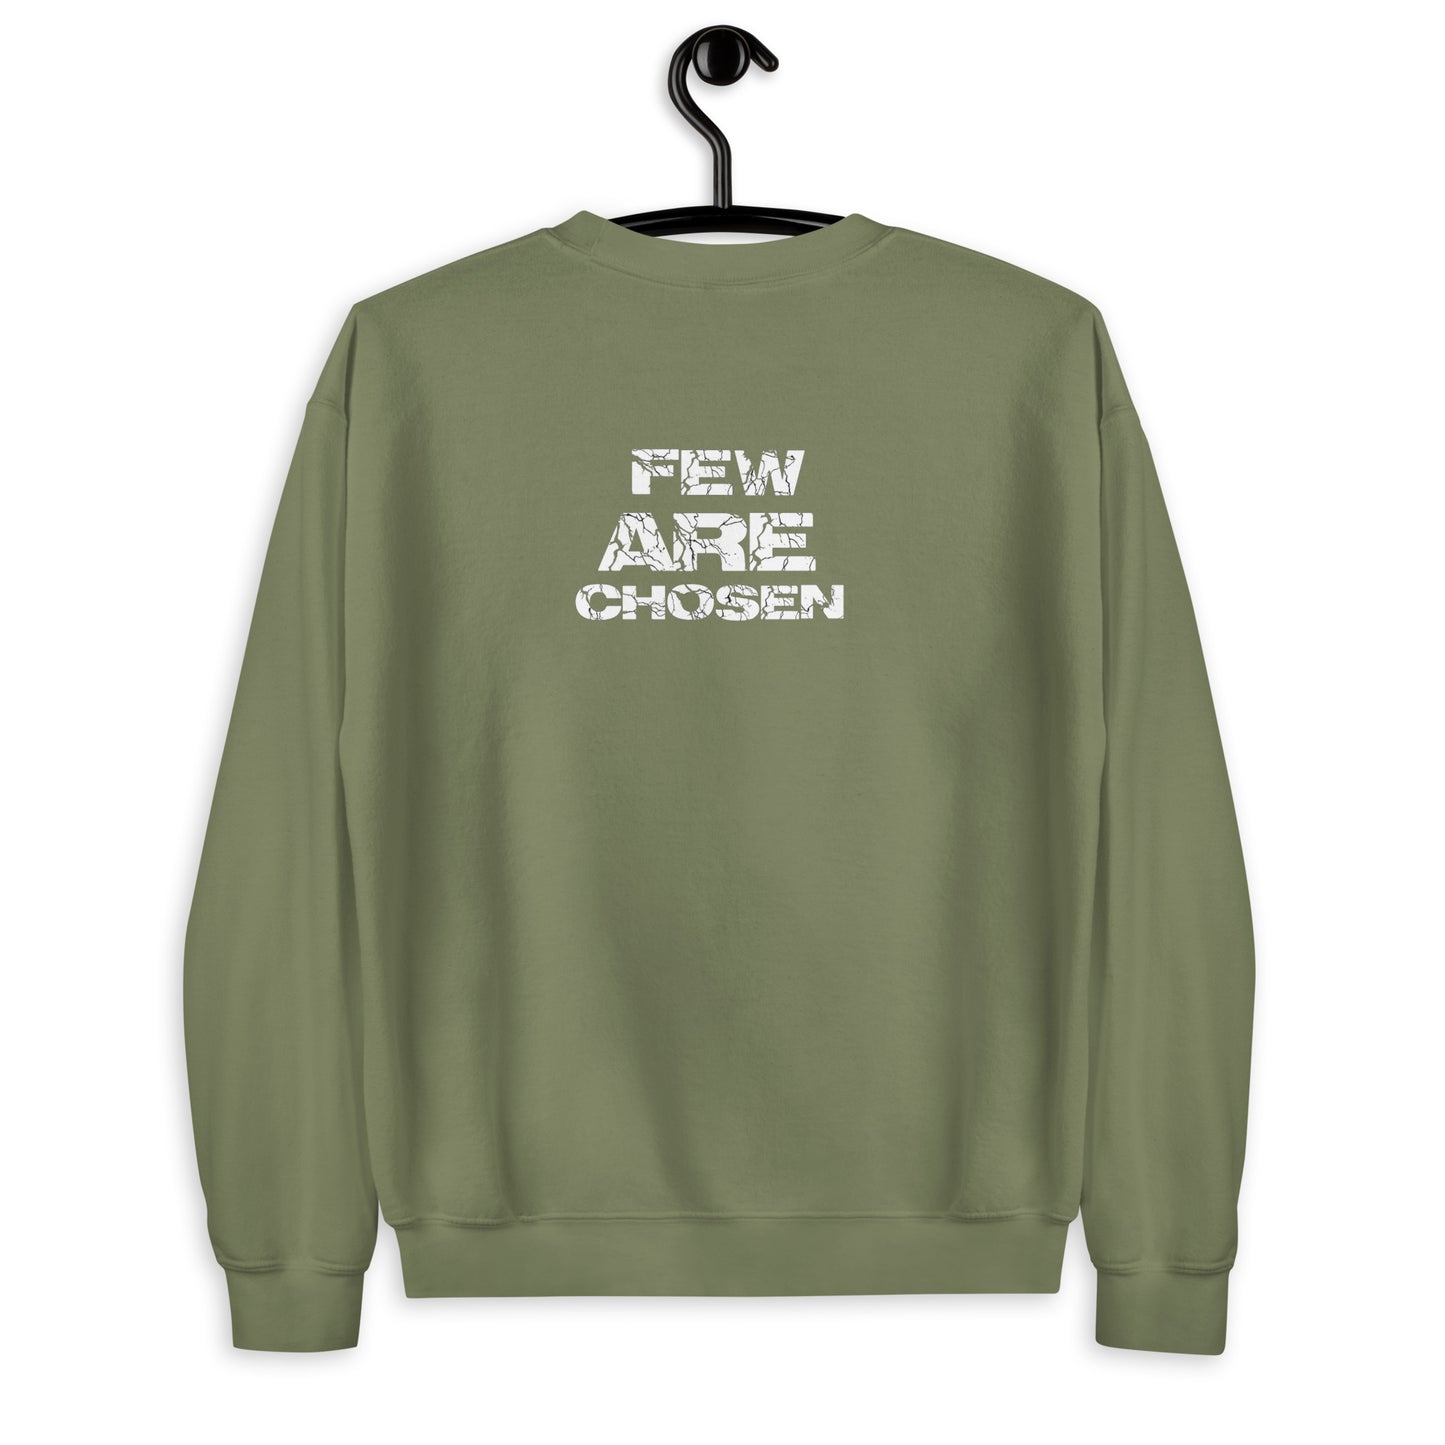 Few Are Chosen Sweatshirt